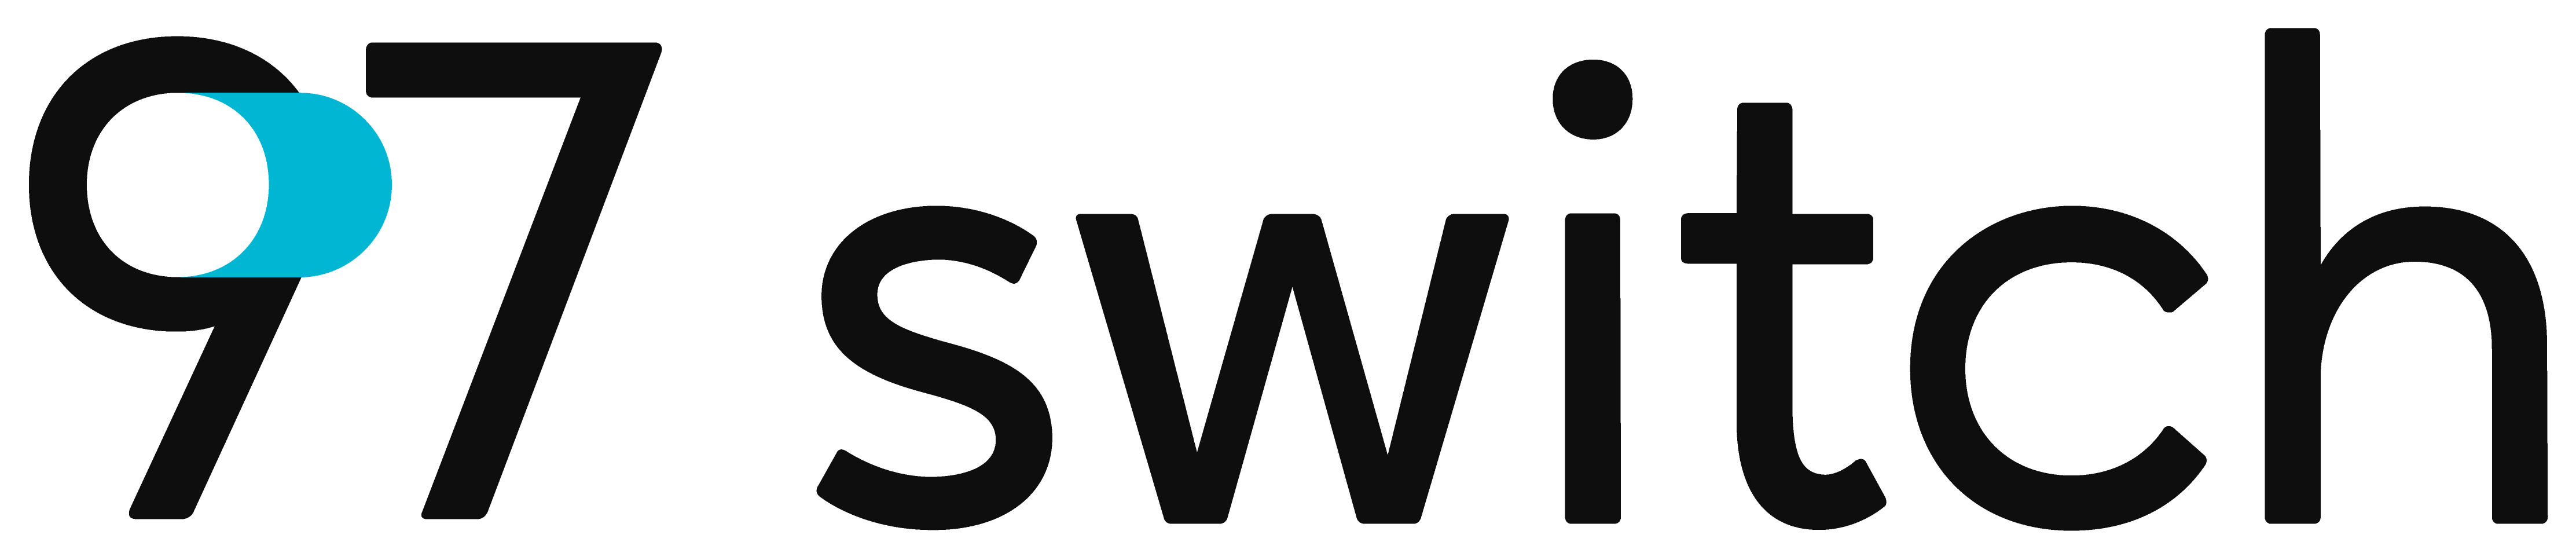 Top BigCommerce Development Business Logo: 97 Switch